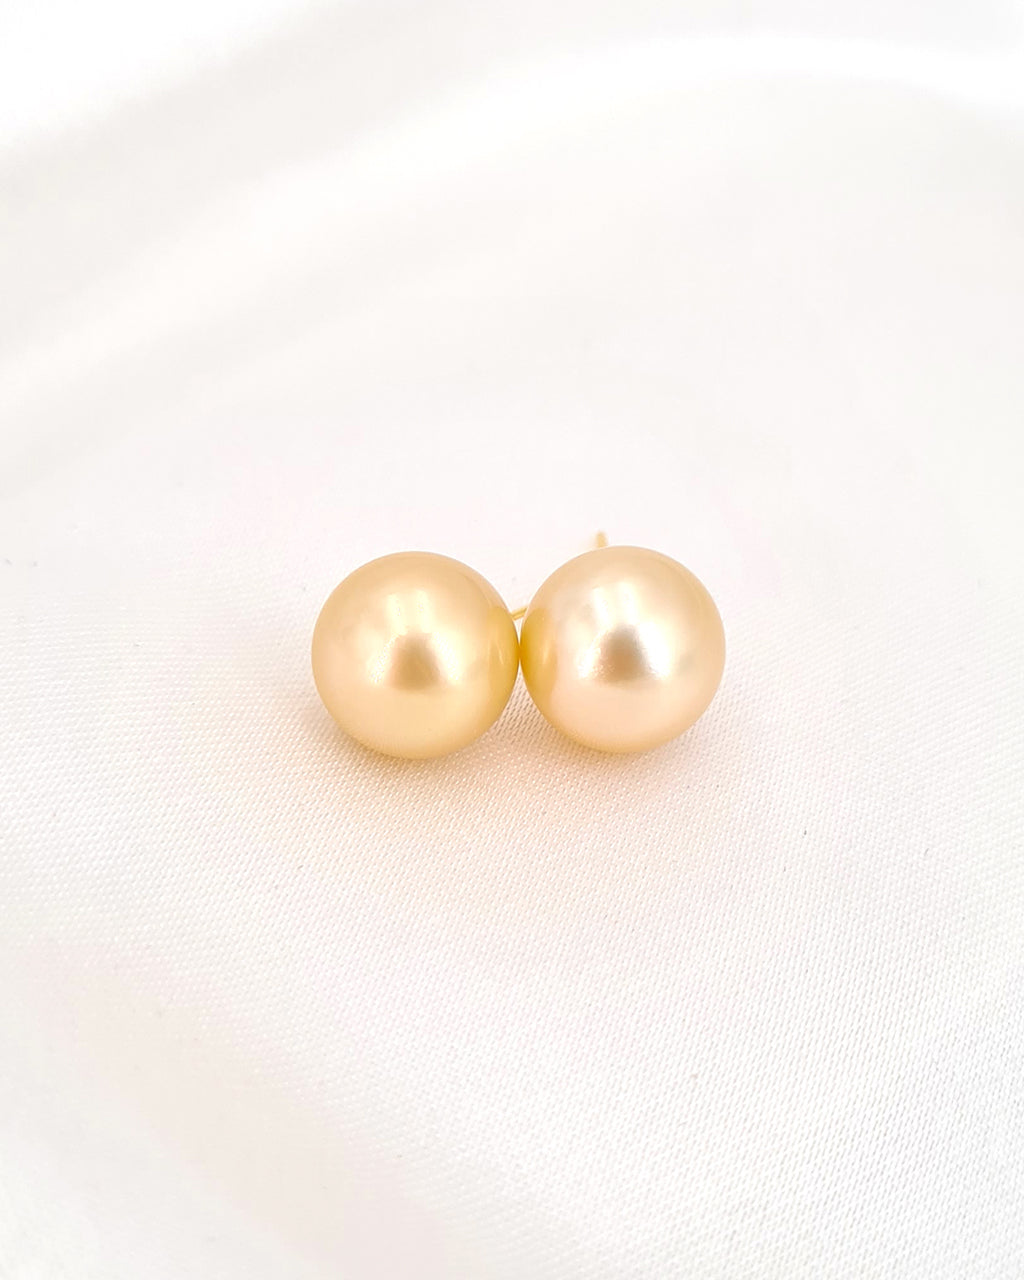 11mm South Sea Pearl 18K Stud Earrings - Champagne Gold, Fine Jewelry